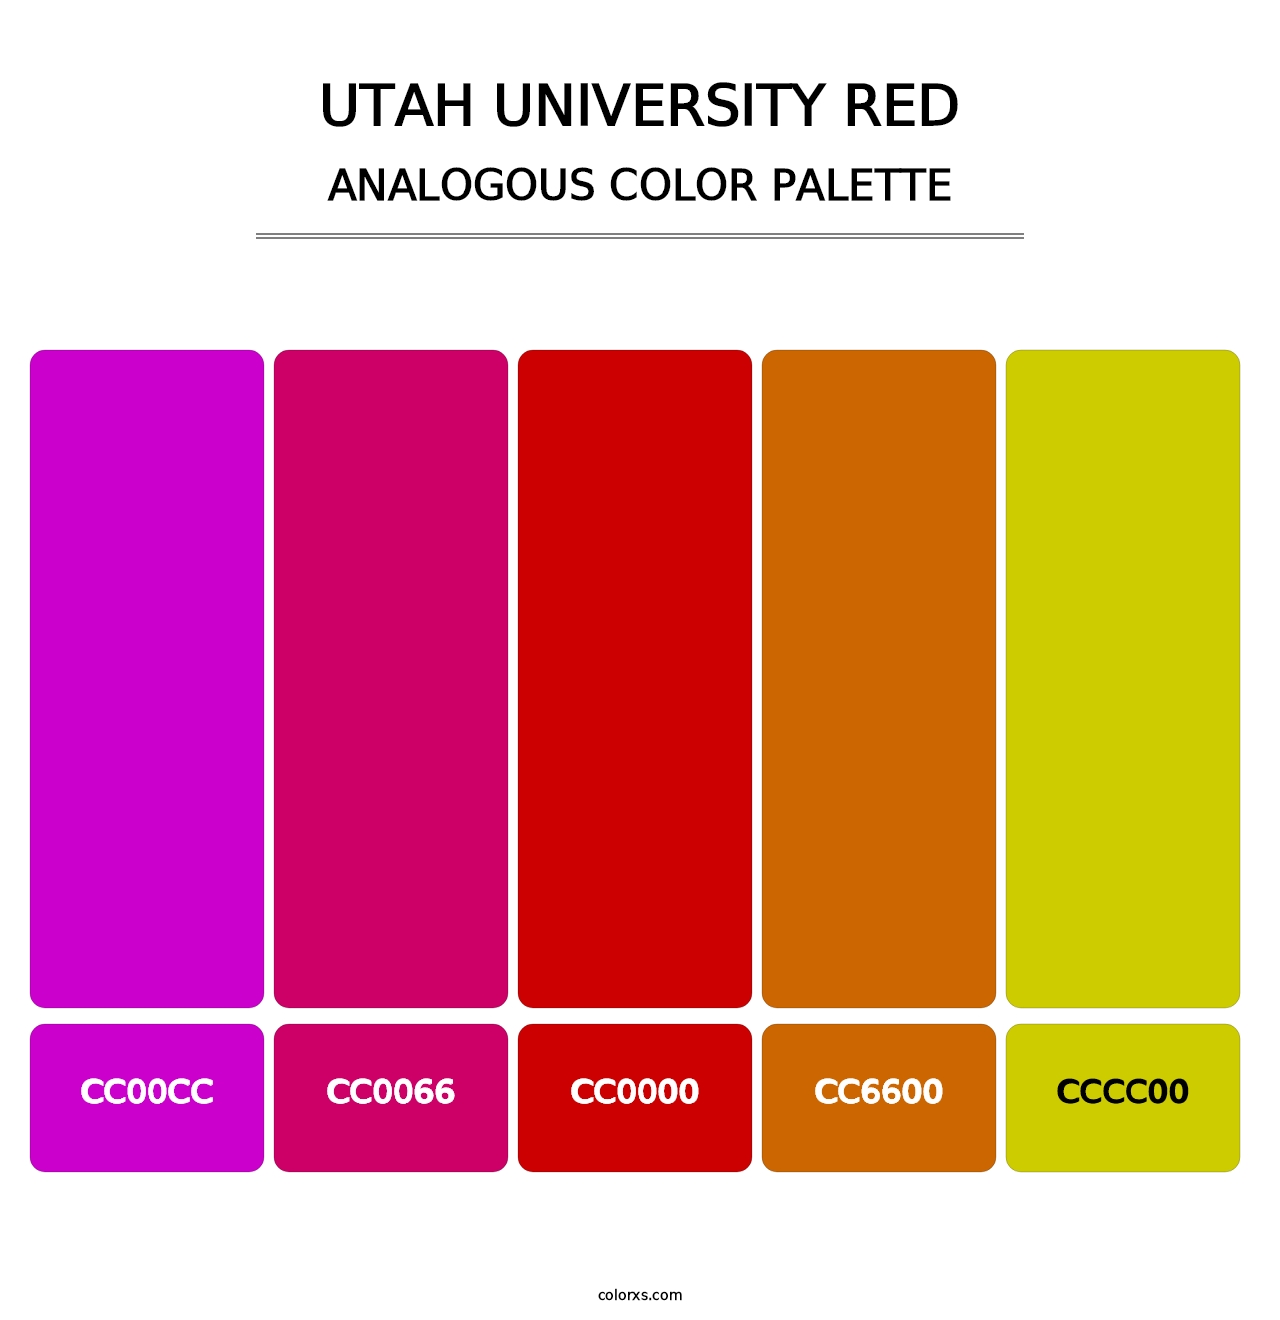 Utah University Red - Analogous Color Palette